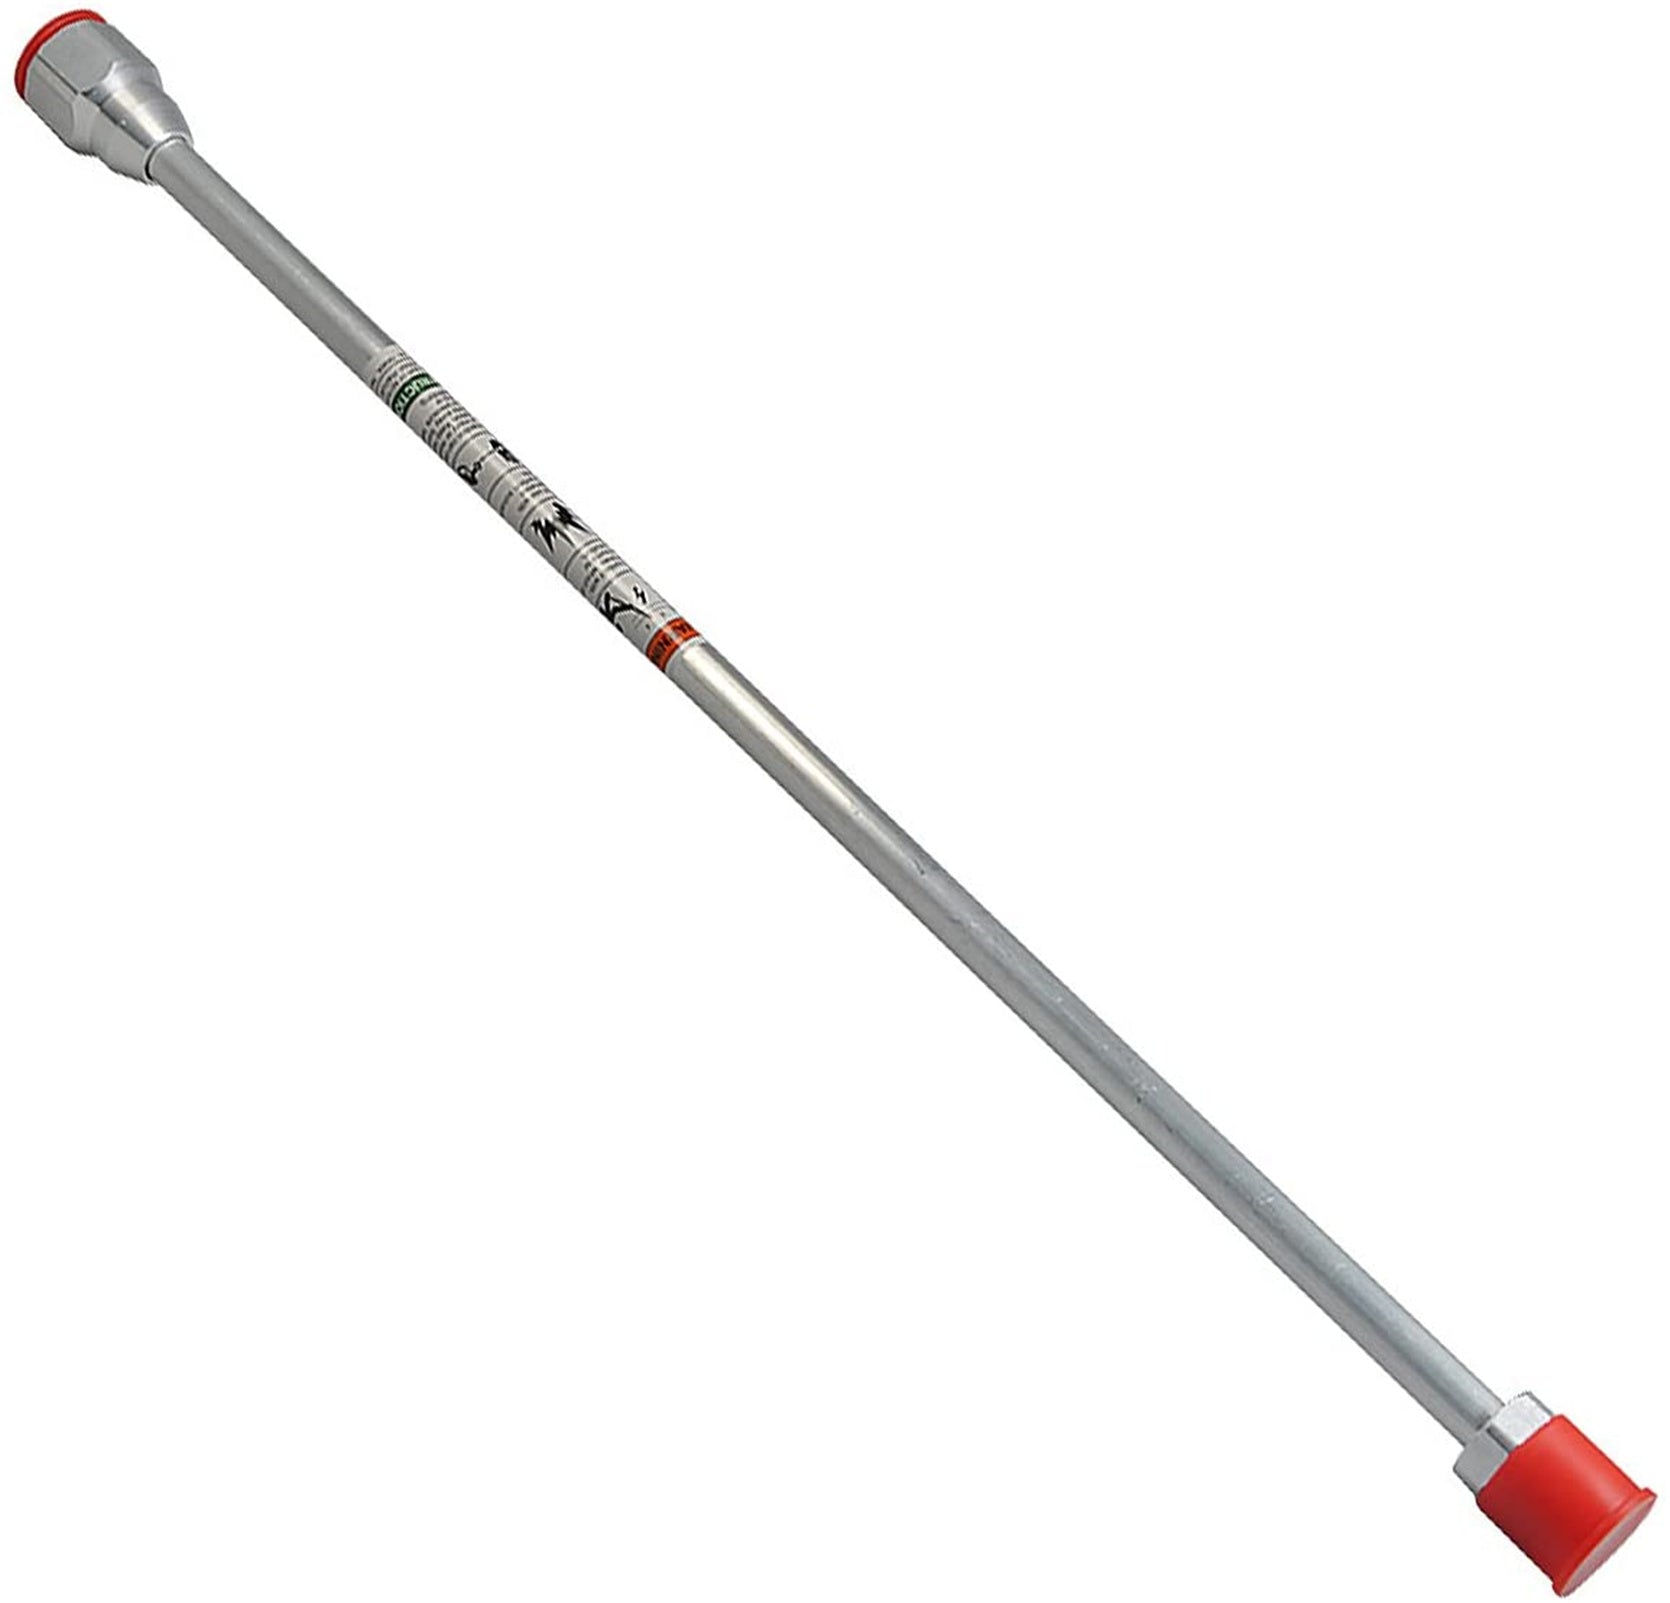 findmall eTekGo Airless Paint Sprayer Spray Gun Tip Extension Pole Rod 29.53"(75cm) FINDMALLPARTS